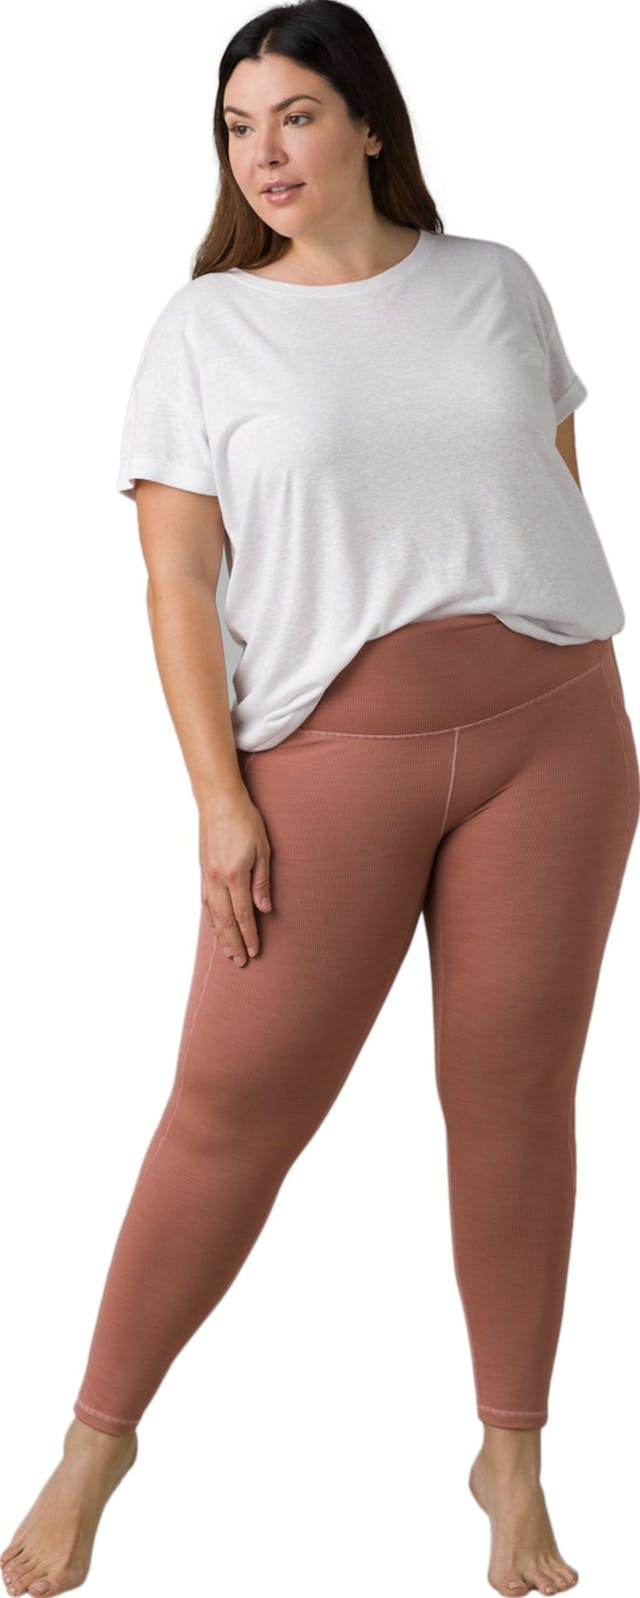 Product image for Becksa Plus Size 7/8 Legging - Women's